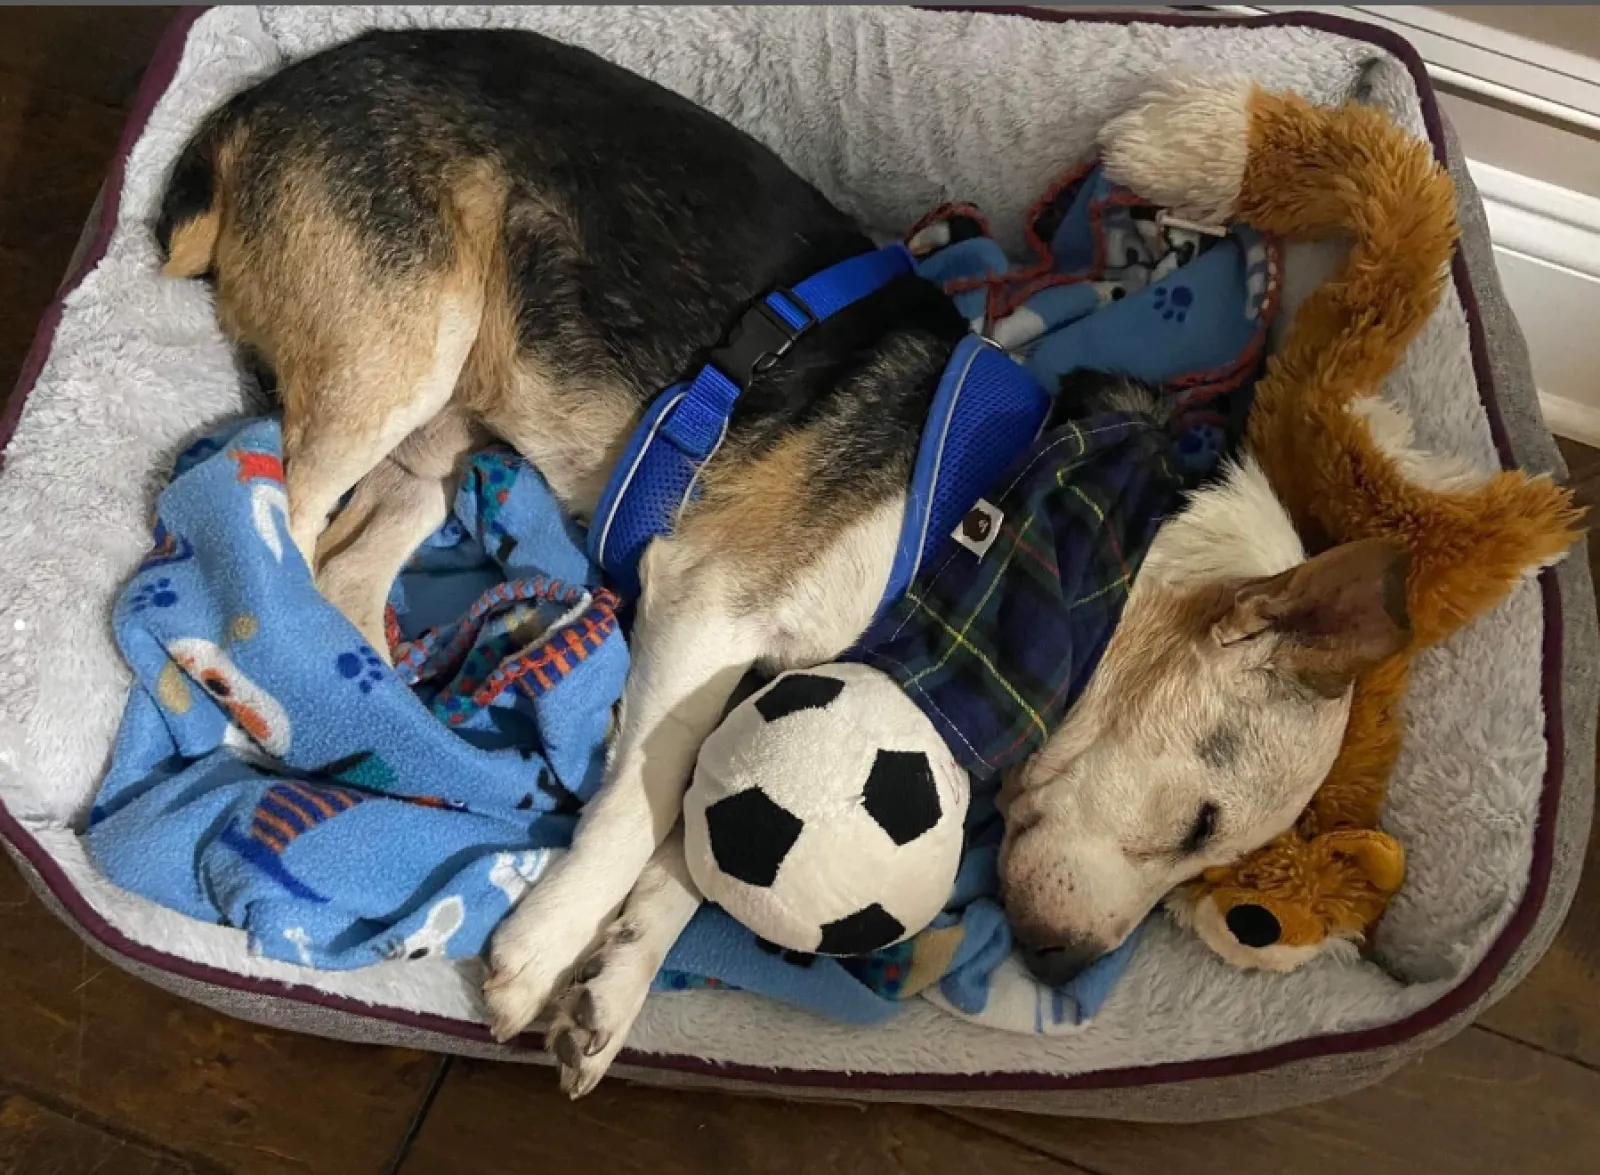 a dog lying on a stuffed animal